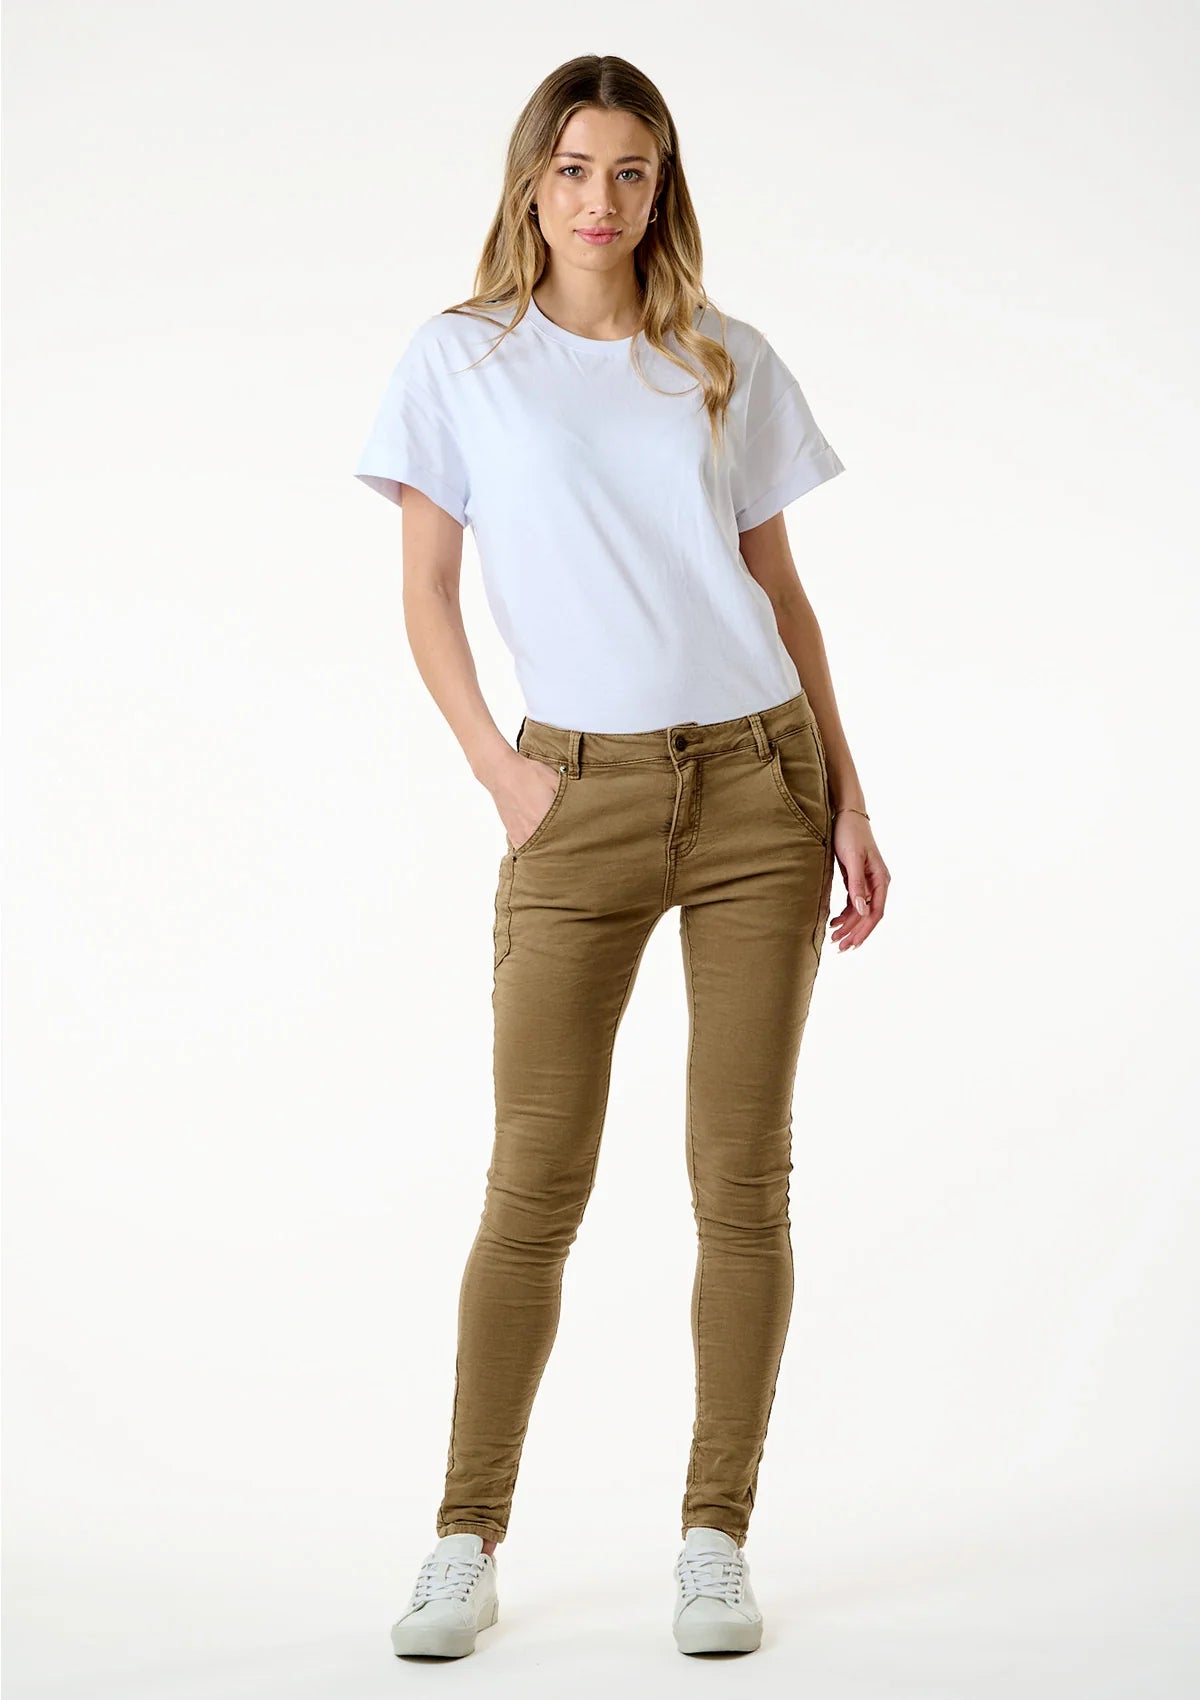 Springfield Olive Pant - Bianco Jeans - Beechworth Emporium